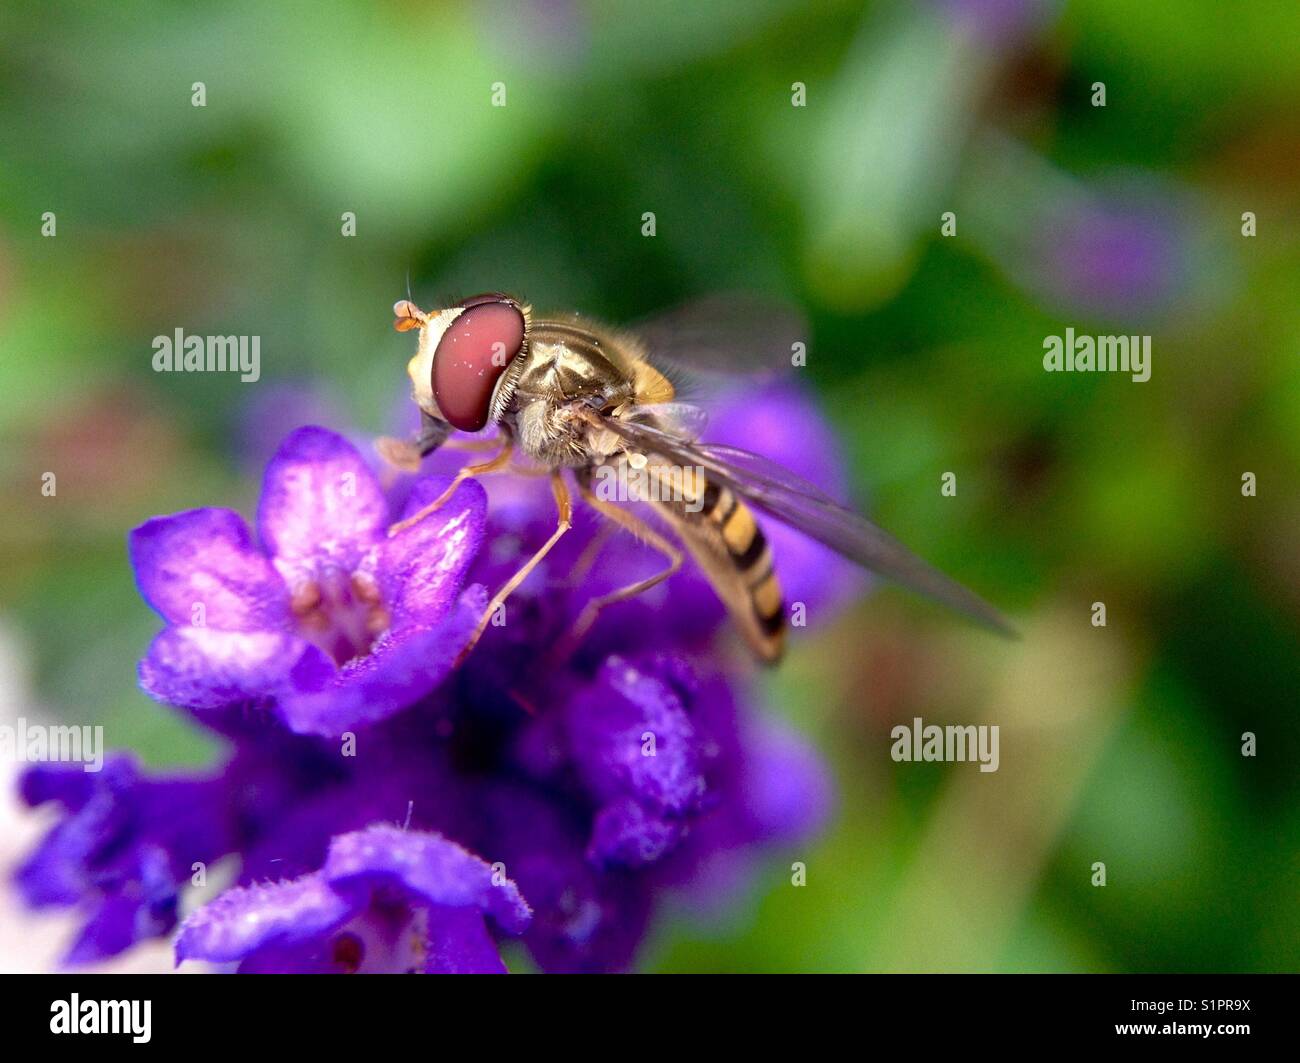 Hoverfly on a lavendar flower Stock Photo